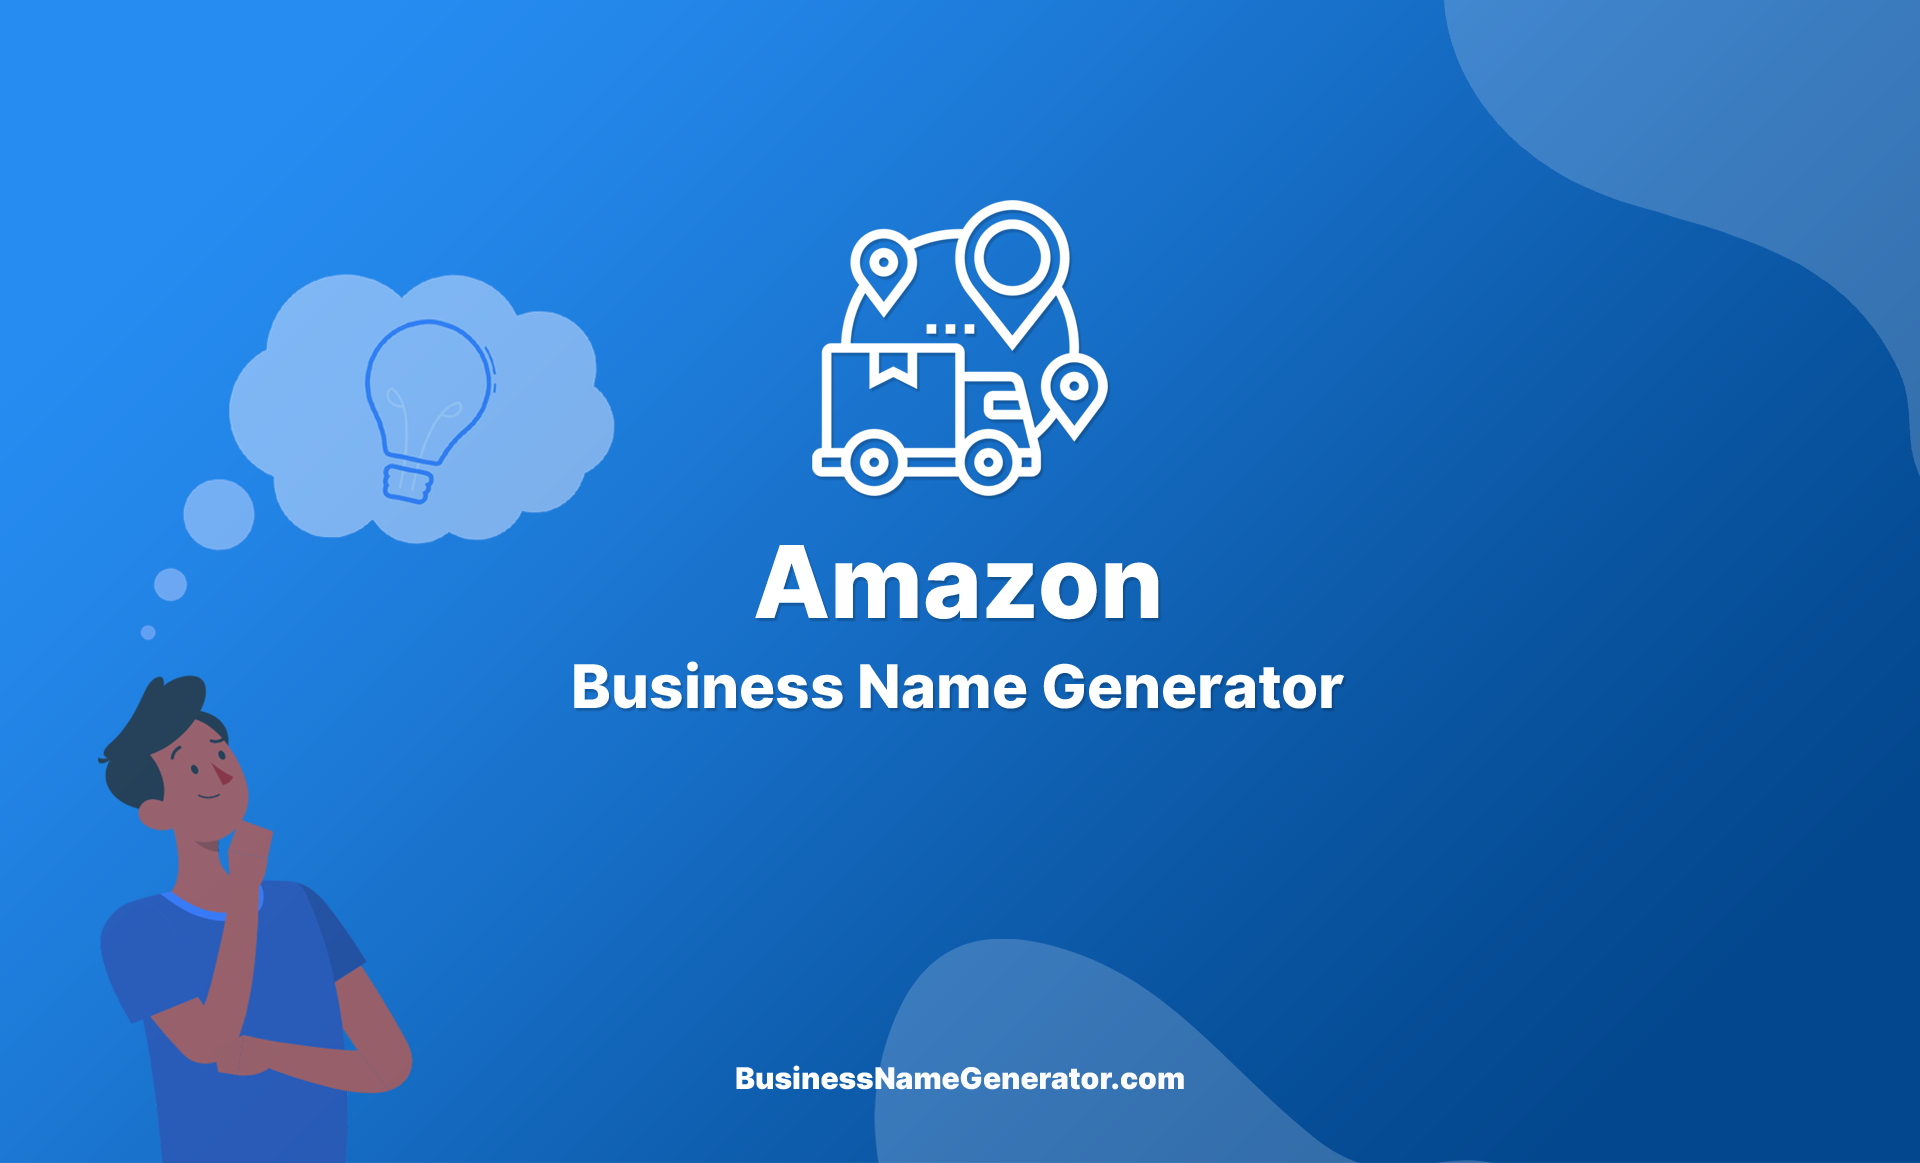 Amazon Business Name Generator